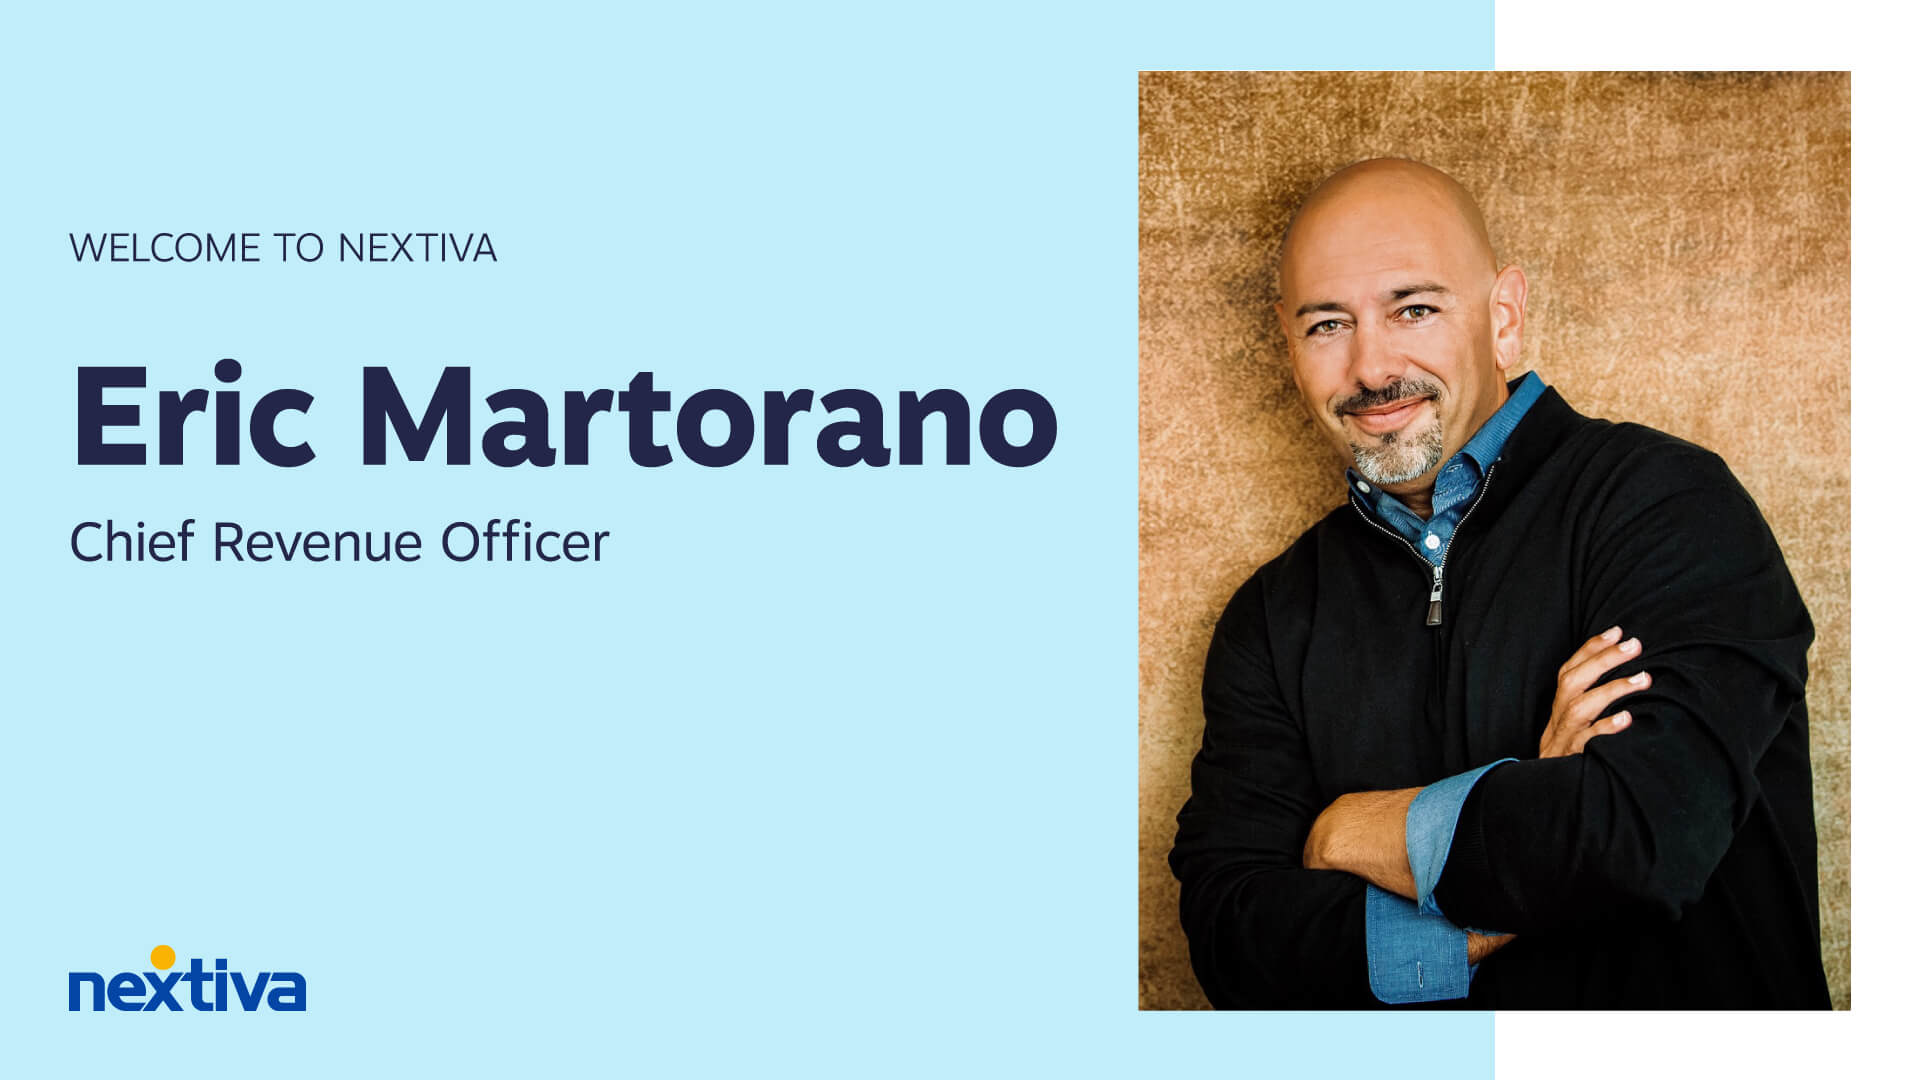 Eric Martorano joins Nextiva as Chief Revenue Officer (CRO)